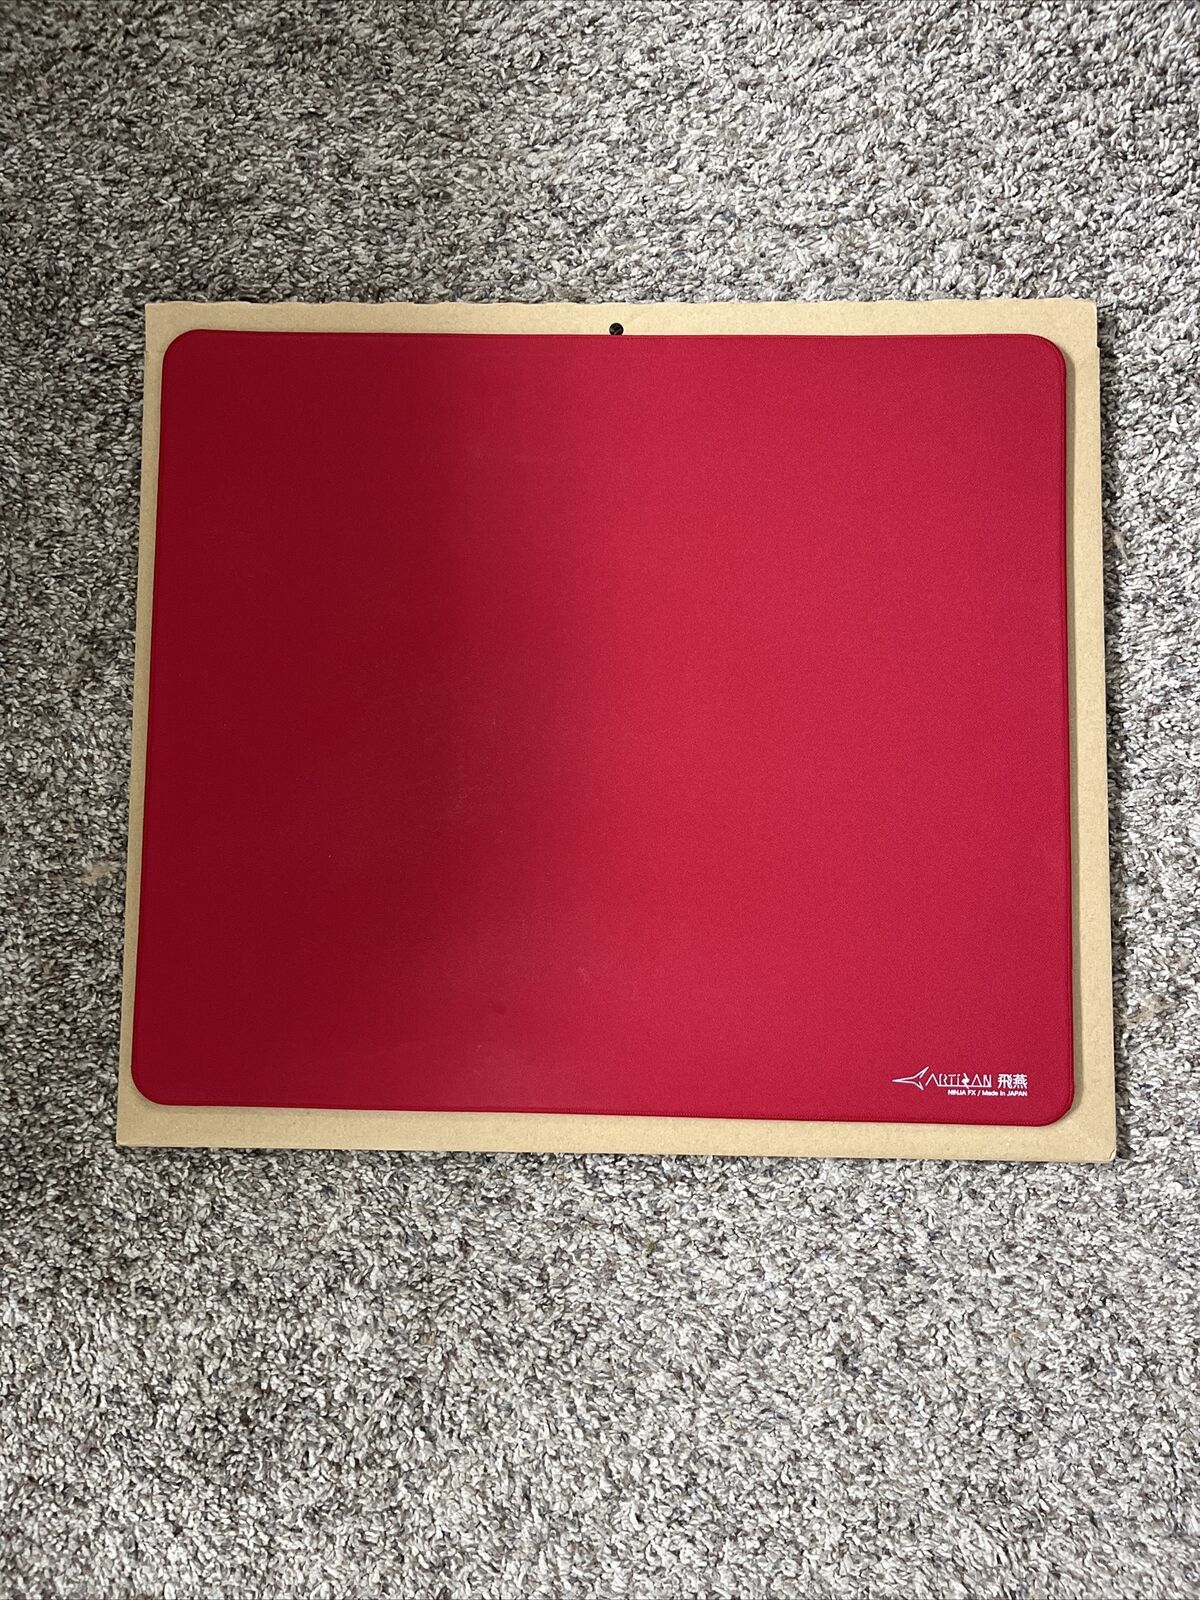 Artisan Ninja FX Hien Mouse Pad - XL, Wine Red. SOFT